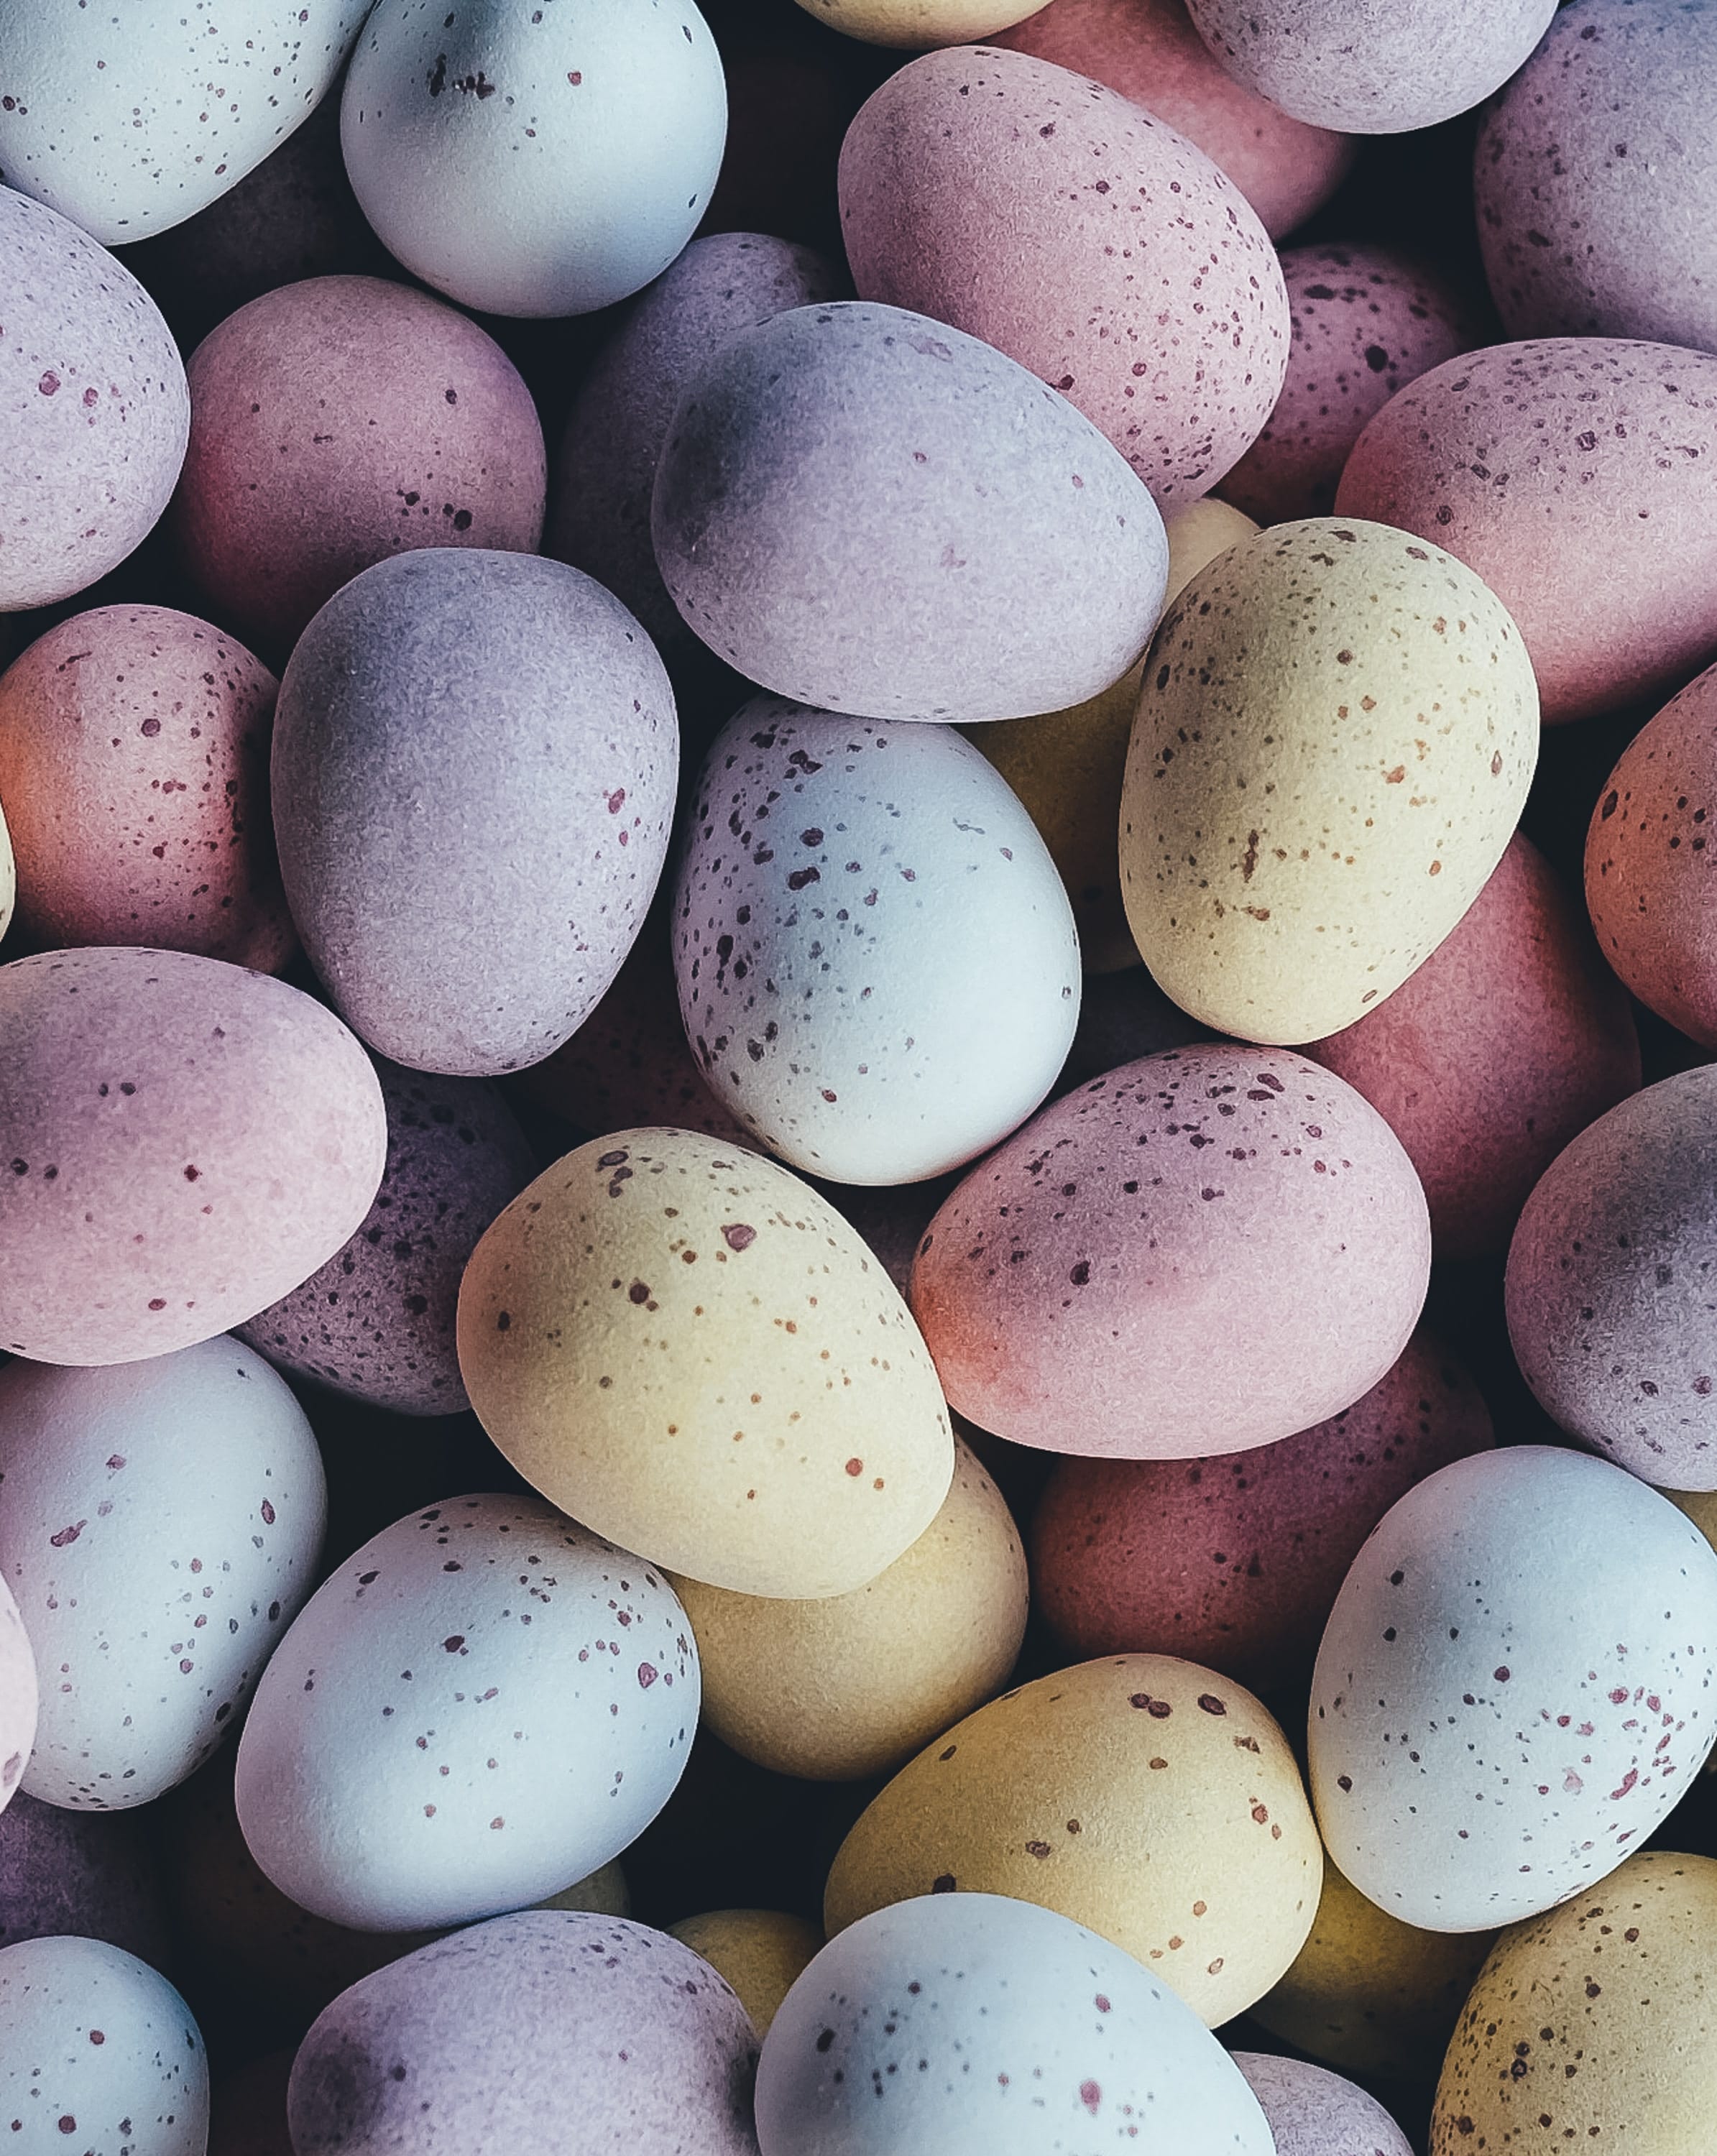 Colored eggs for Easter; image by Annie Spratt, via unsplash.com.